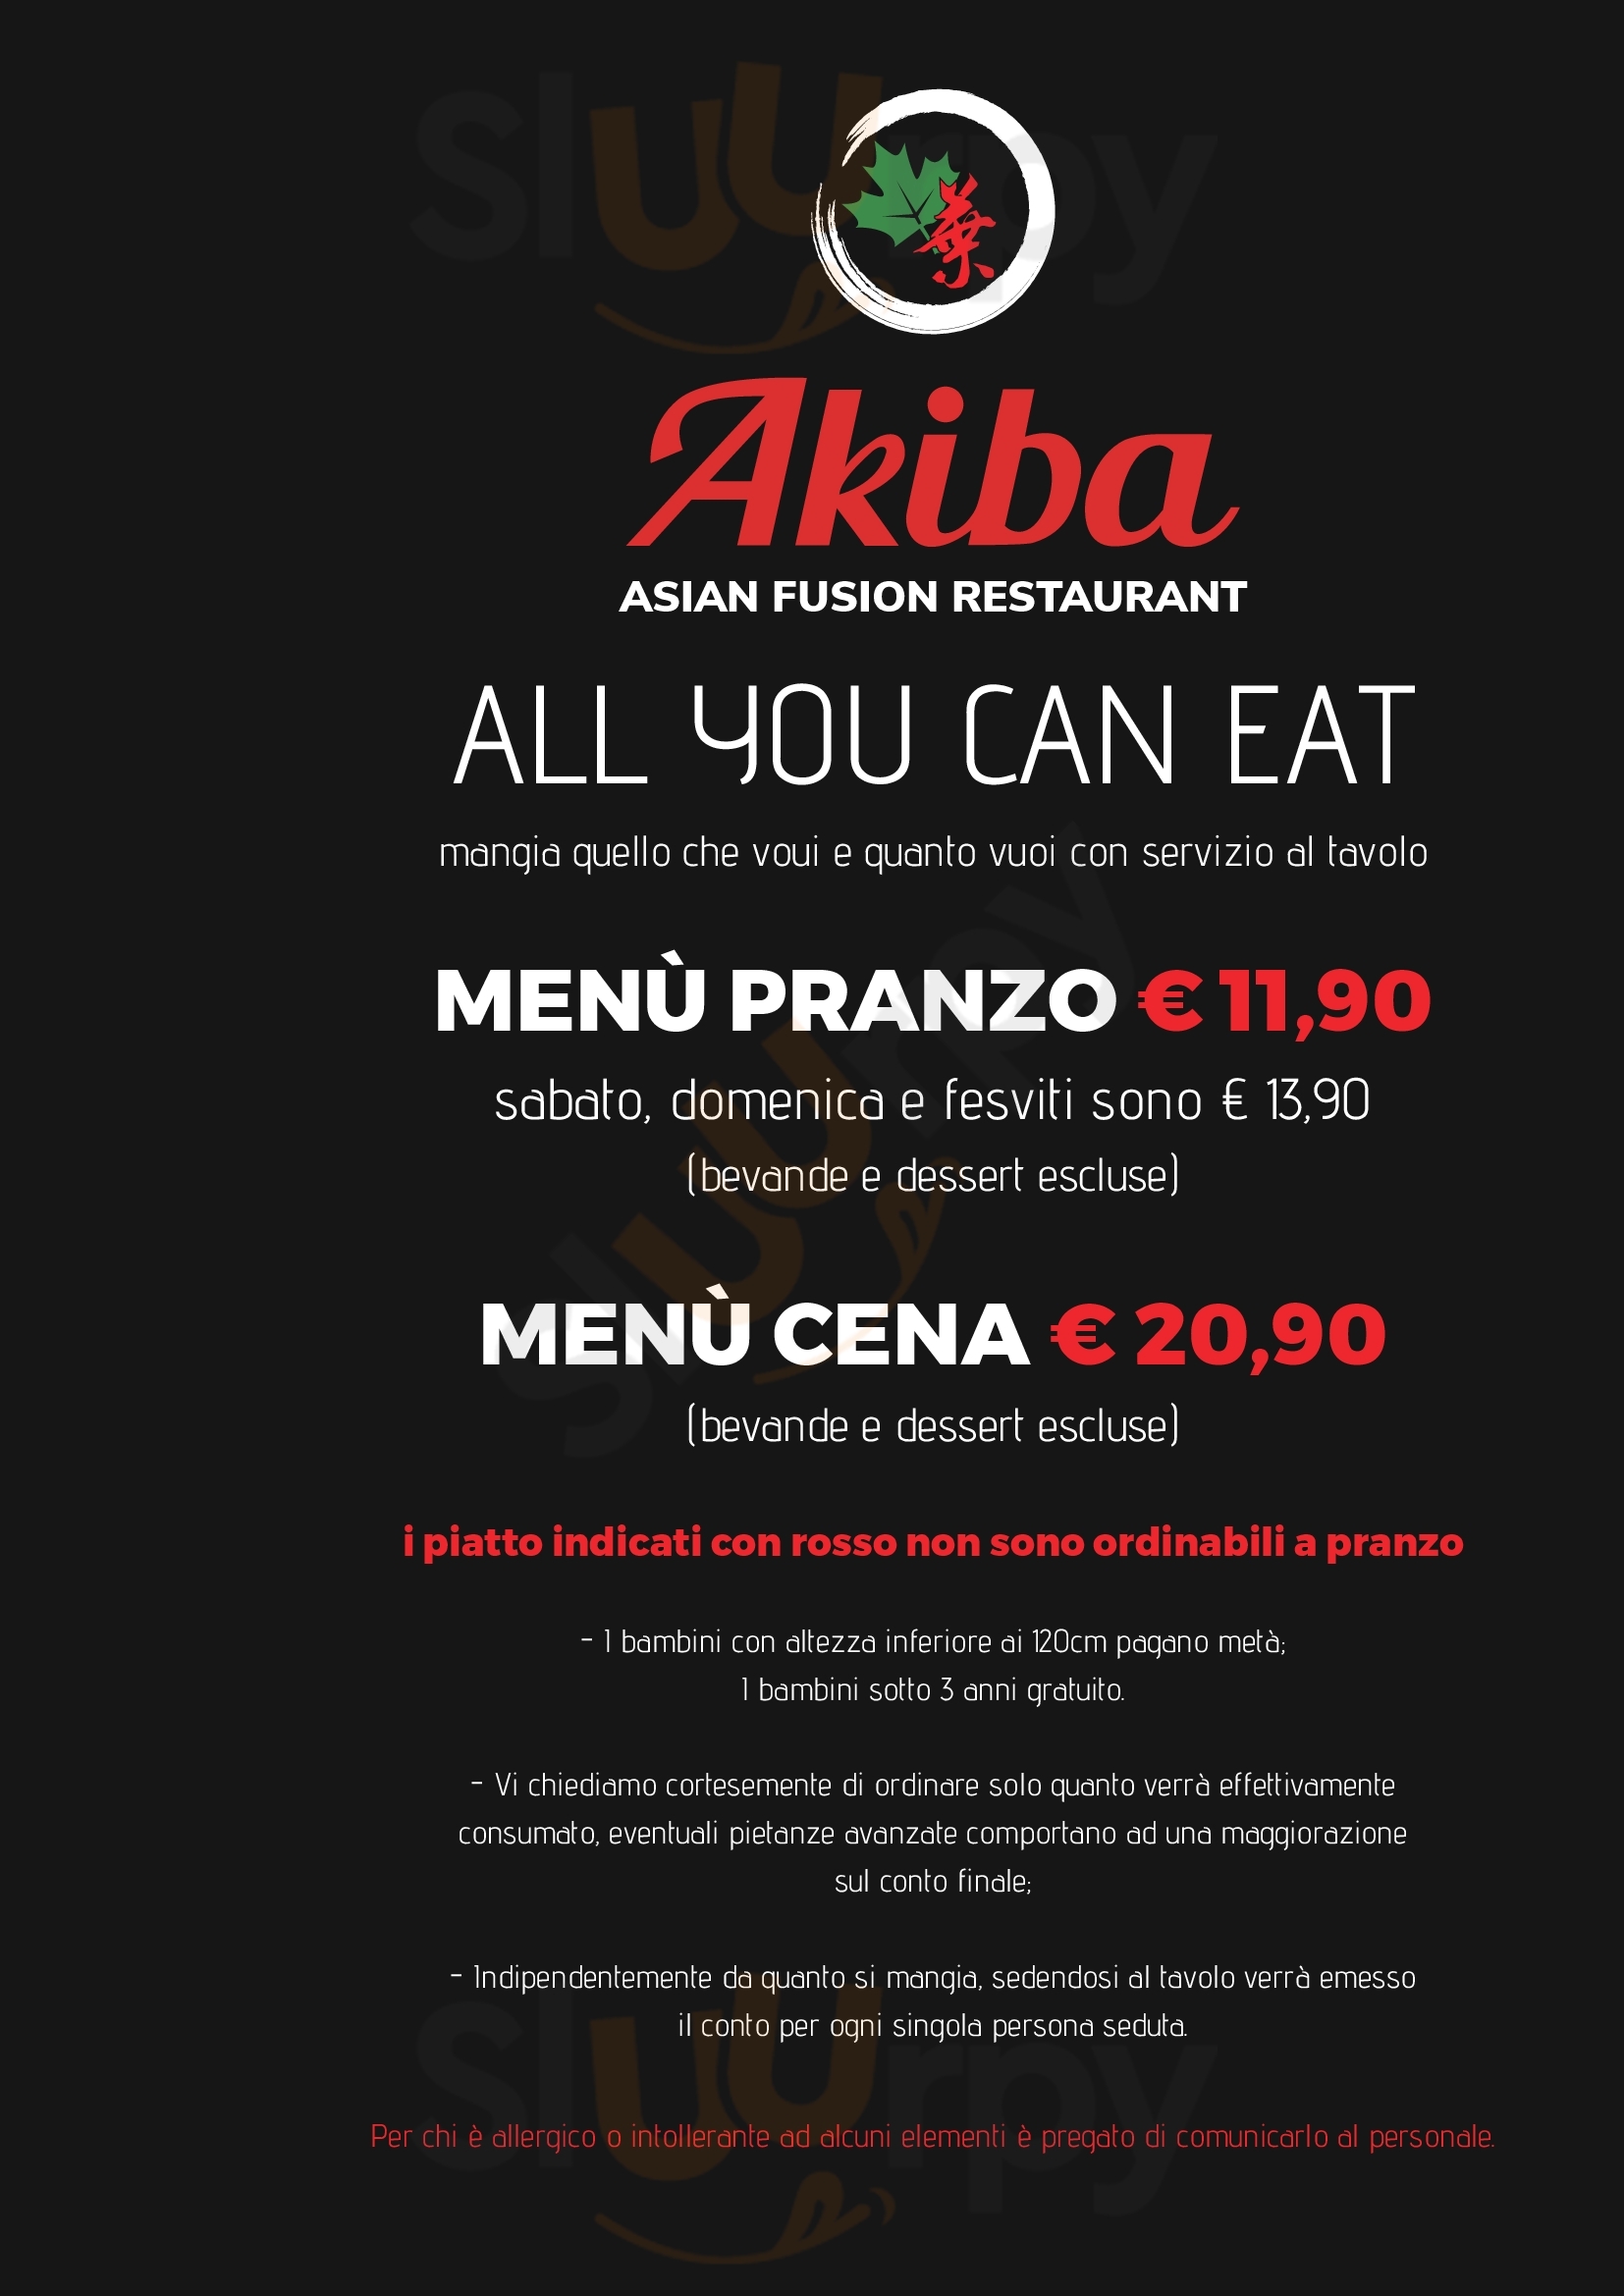 Akiba Asian Fusion Japanese Restaurant Codogno menù 1 pagina